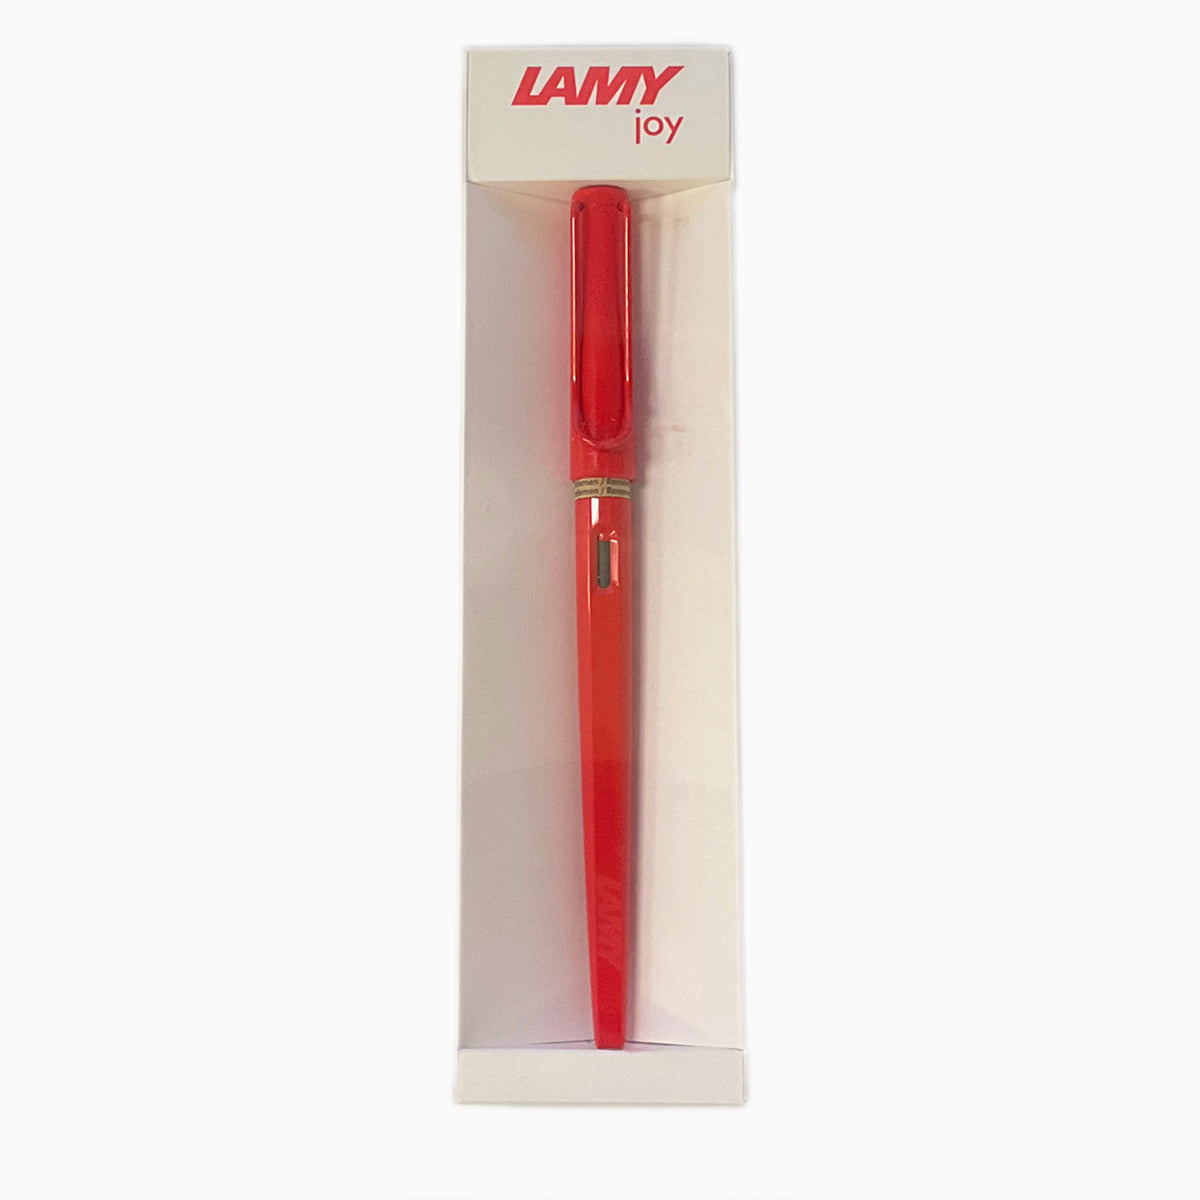 Lamy Joy Fountain Pen with Calligraphy Nib